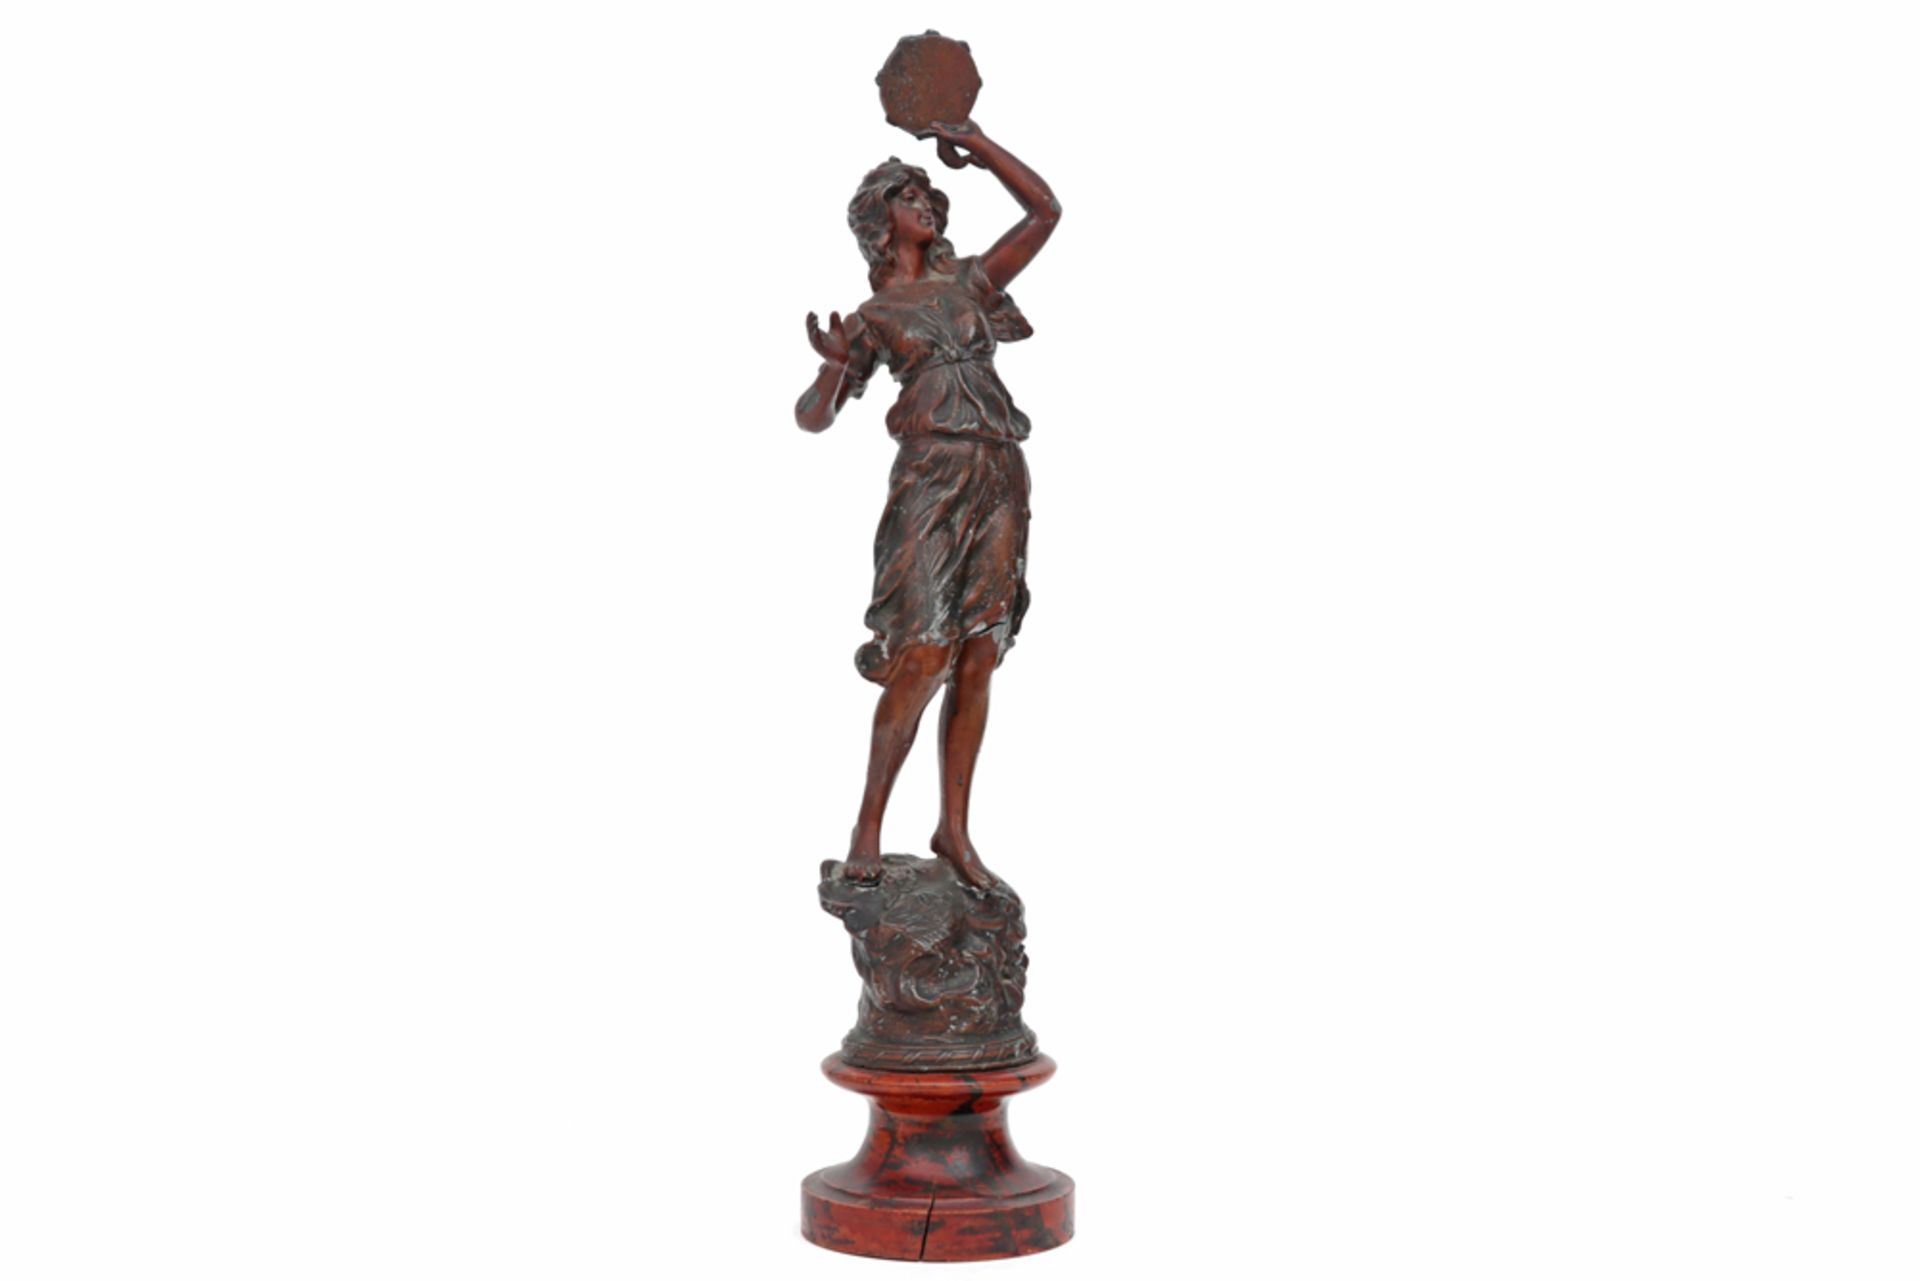 zamac sculpture || Sculptuur in zamac : "Danseres" - hoogte : 46 cm